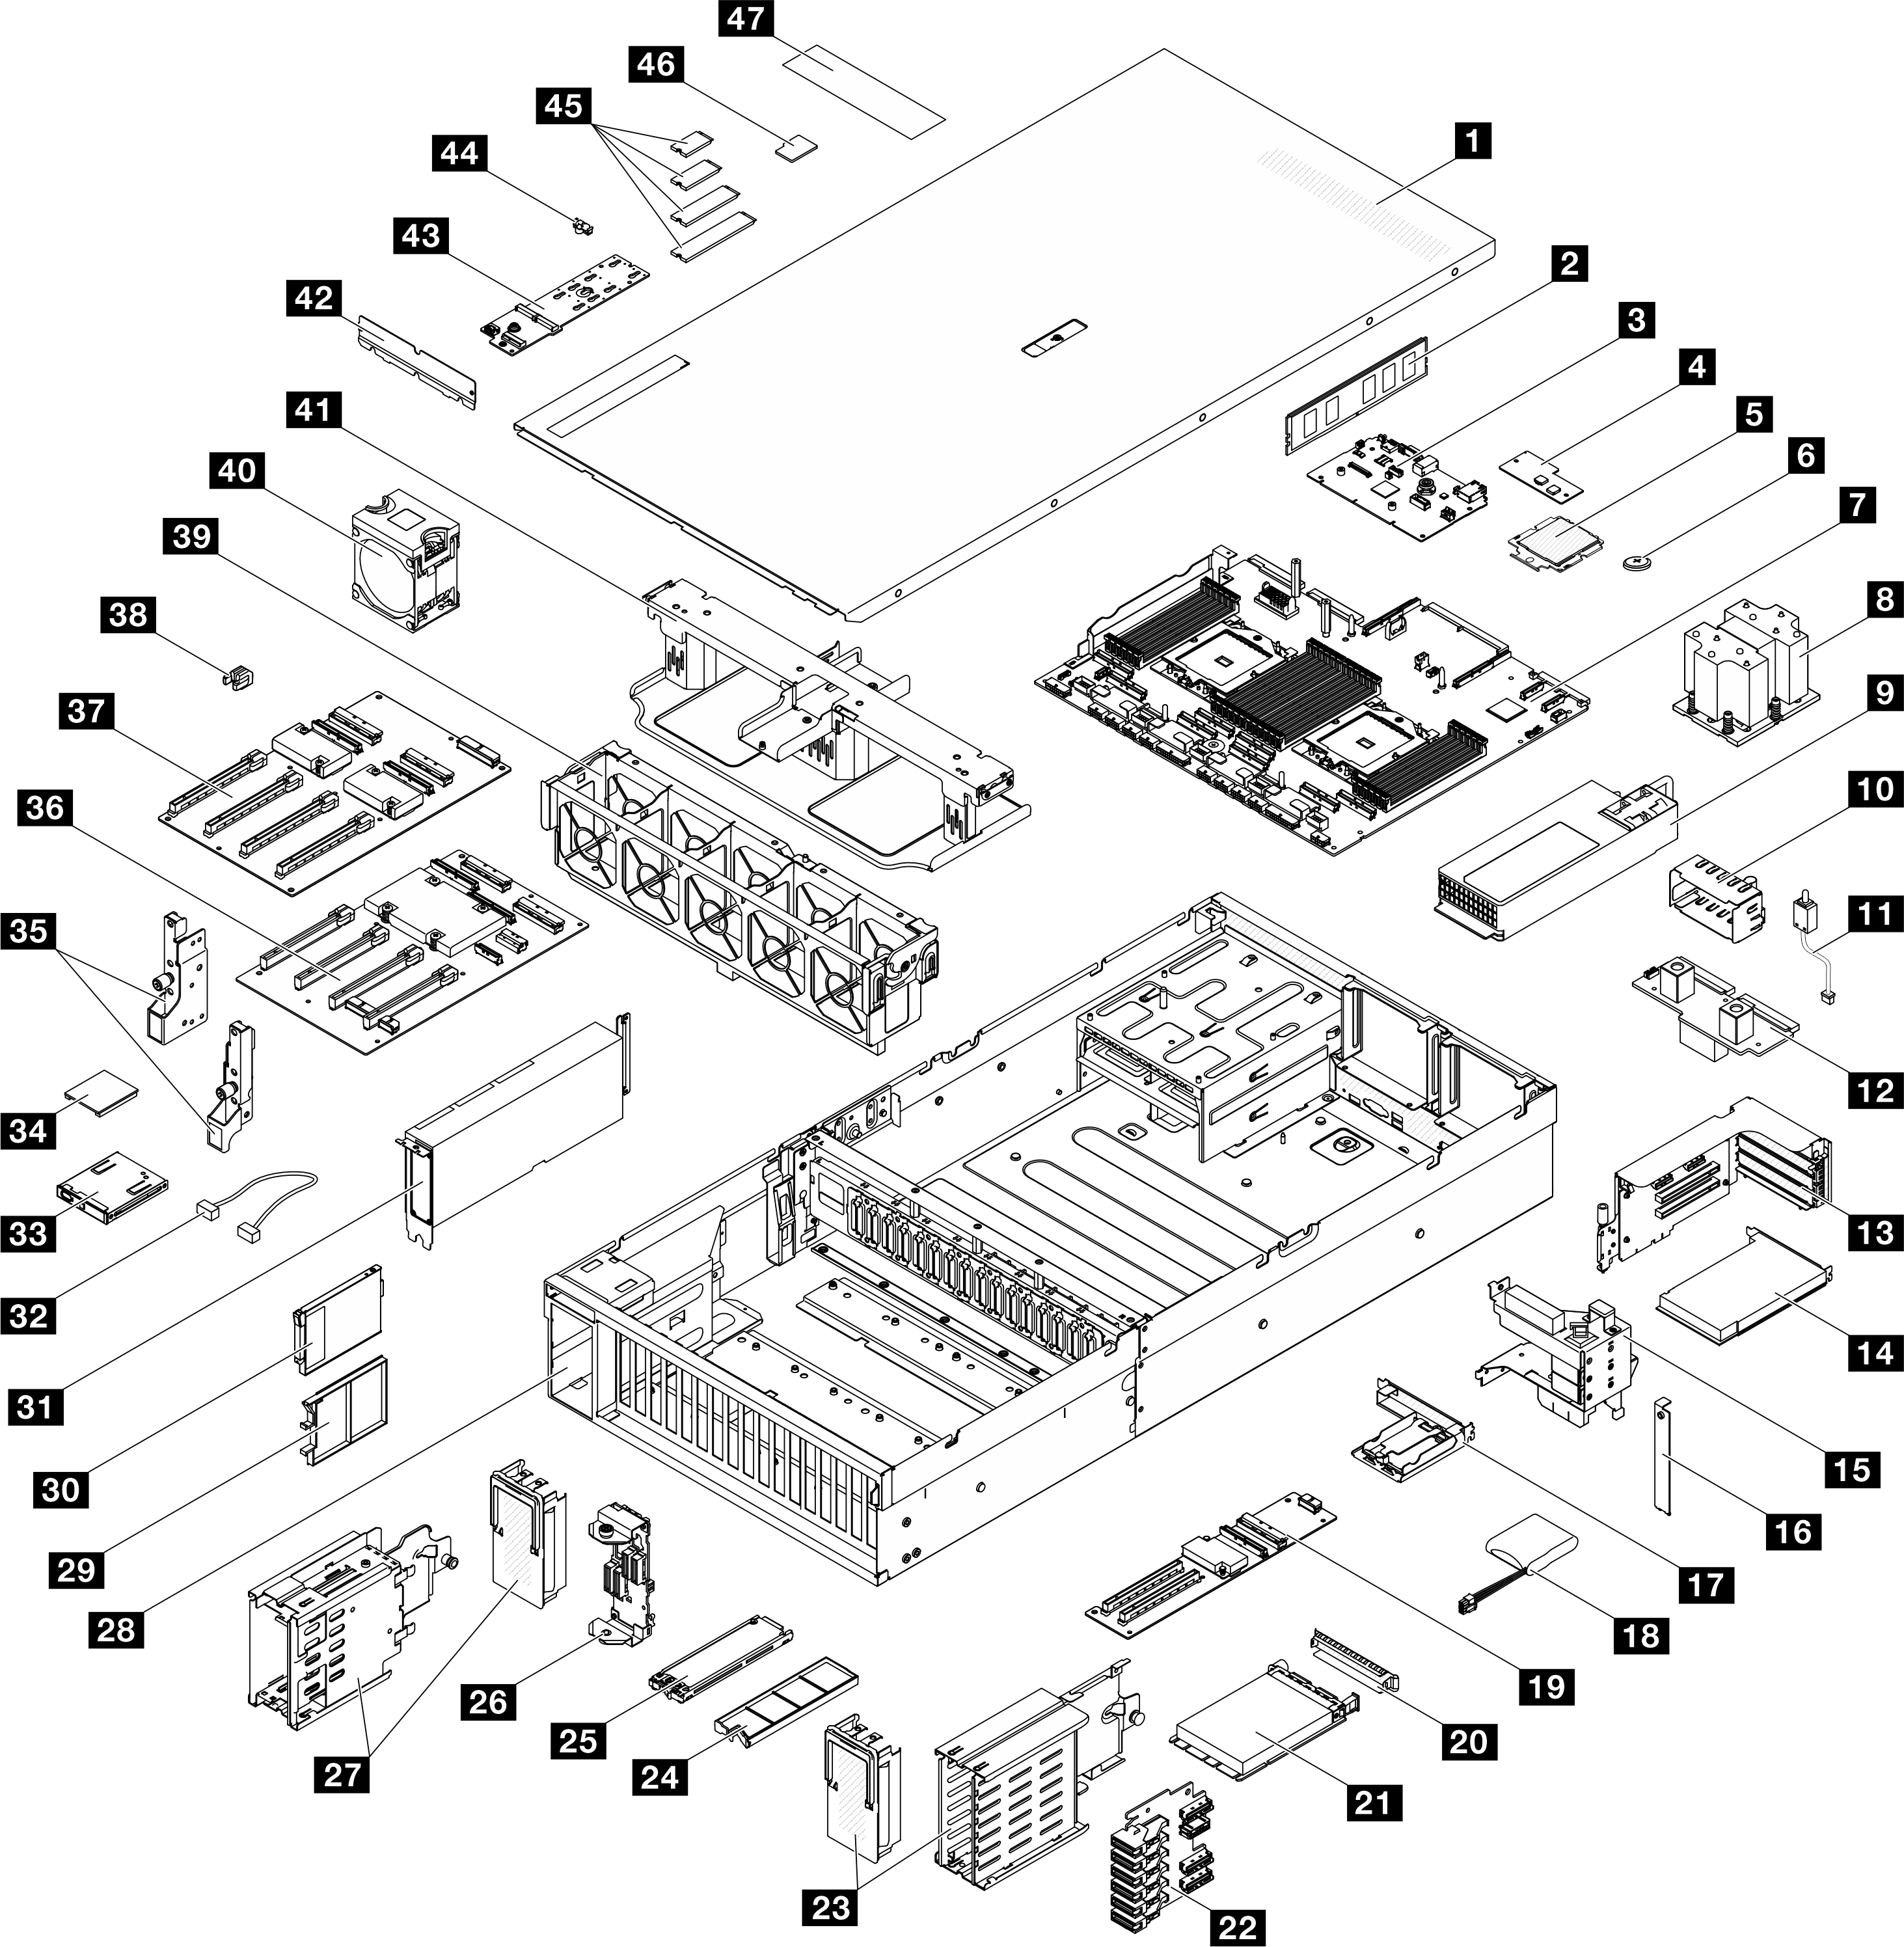 Server components of the 8-DW GPU 型號